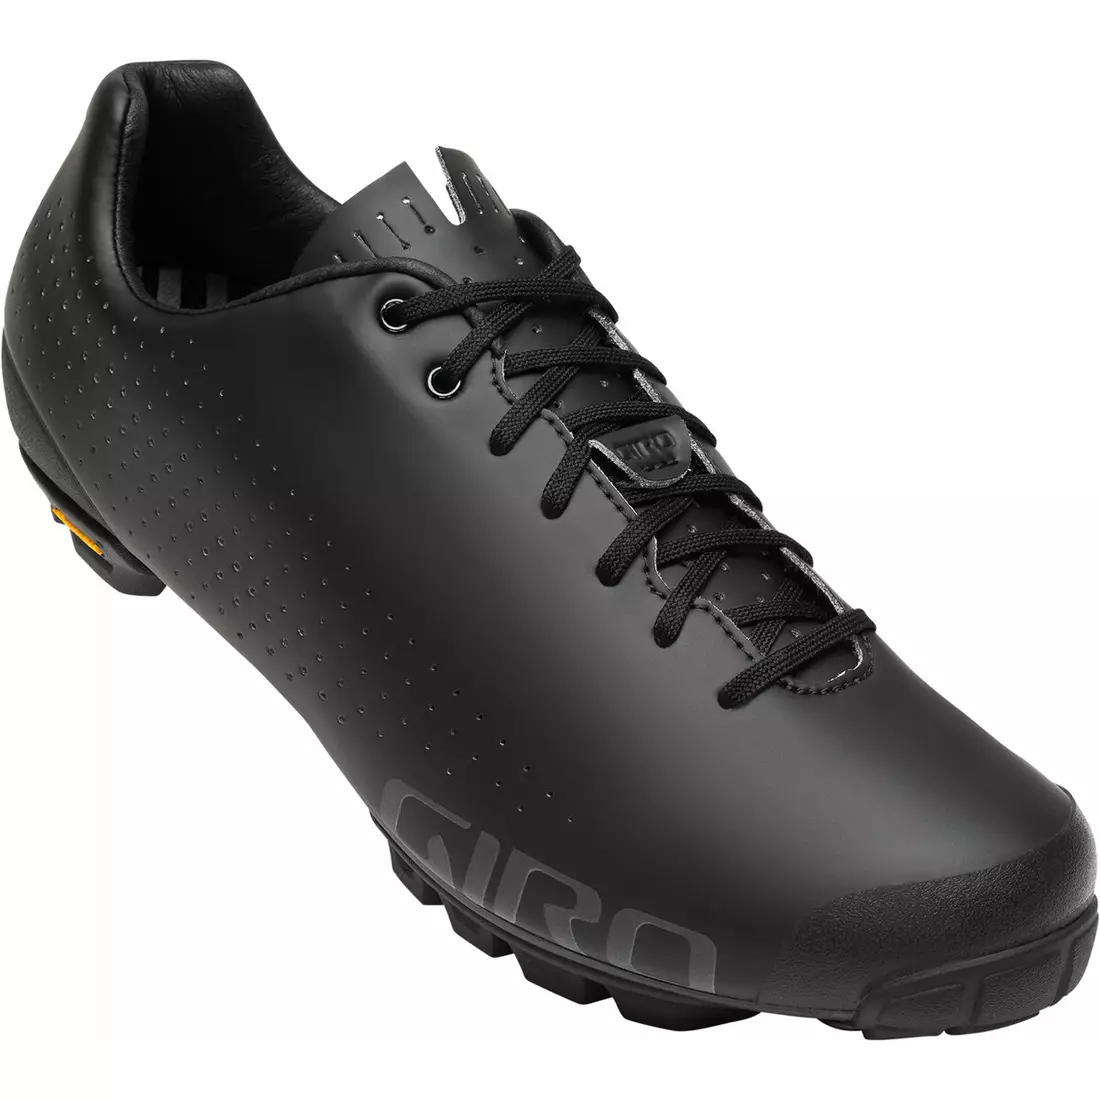 GIRO men's bicycle shoes EMPIRE VR90 black GR-7111050